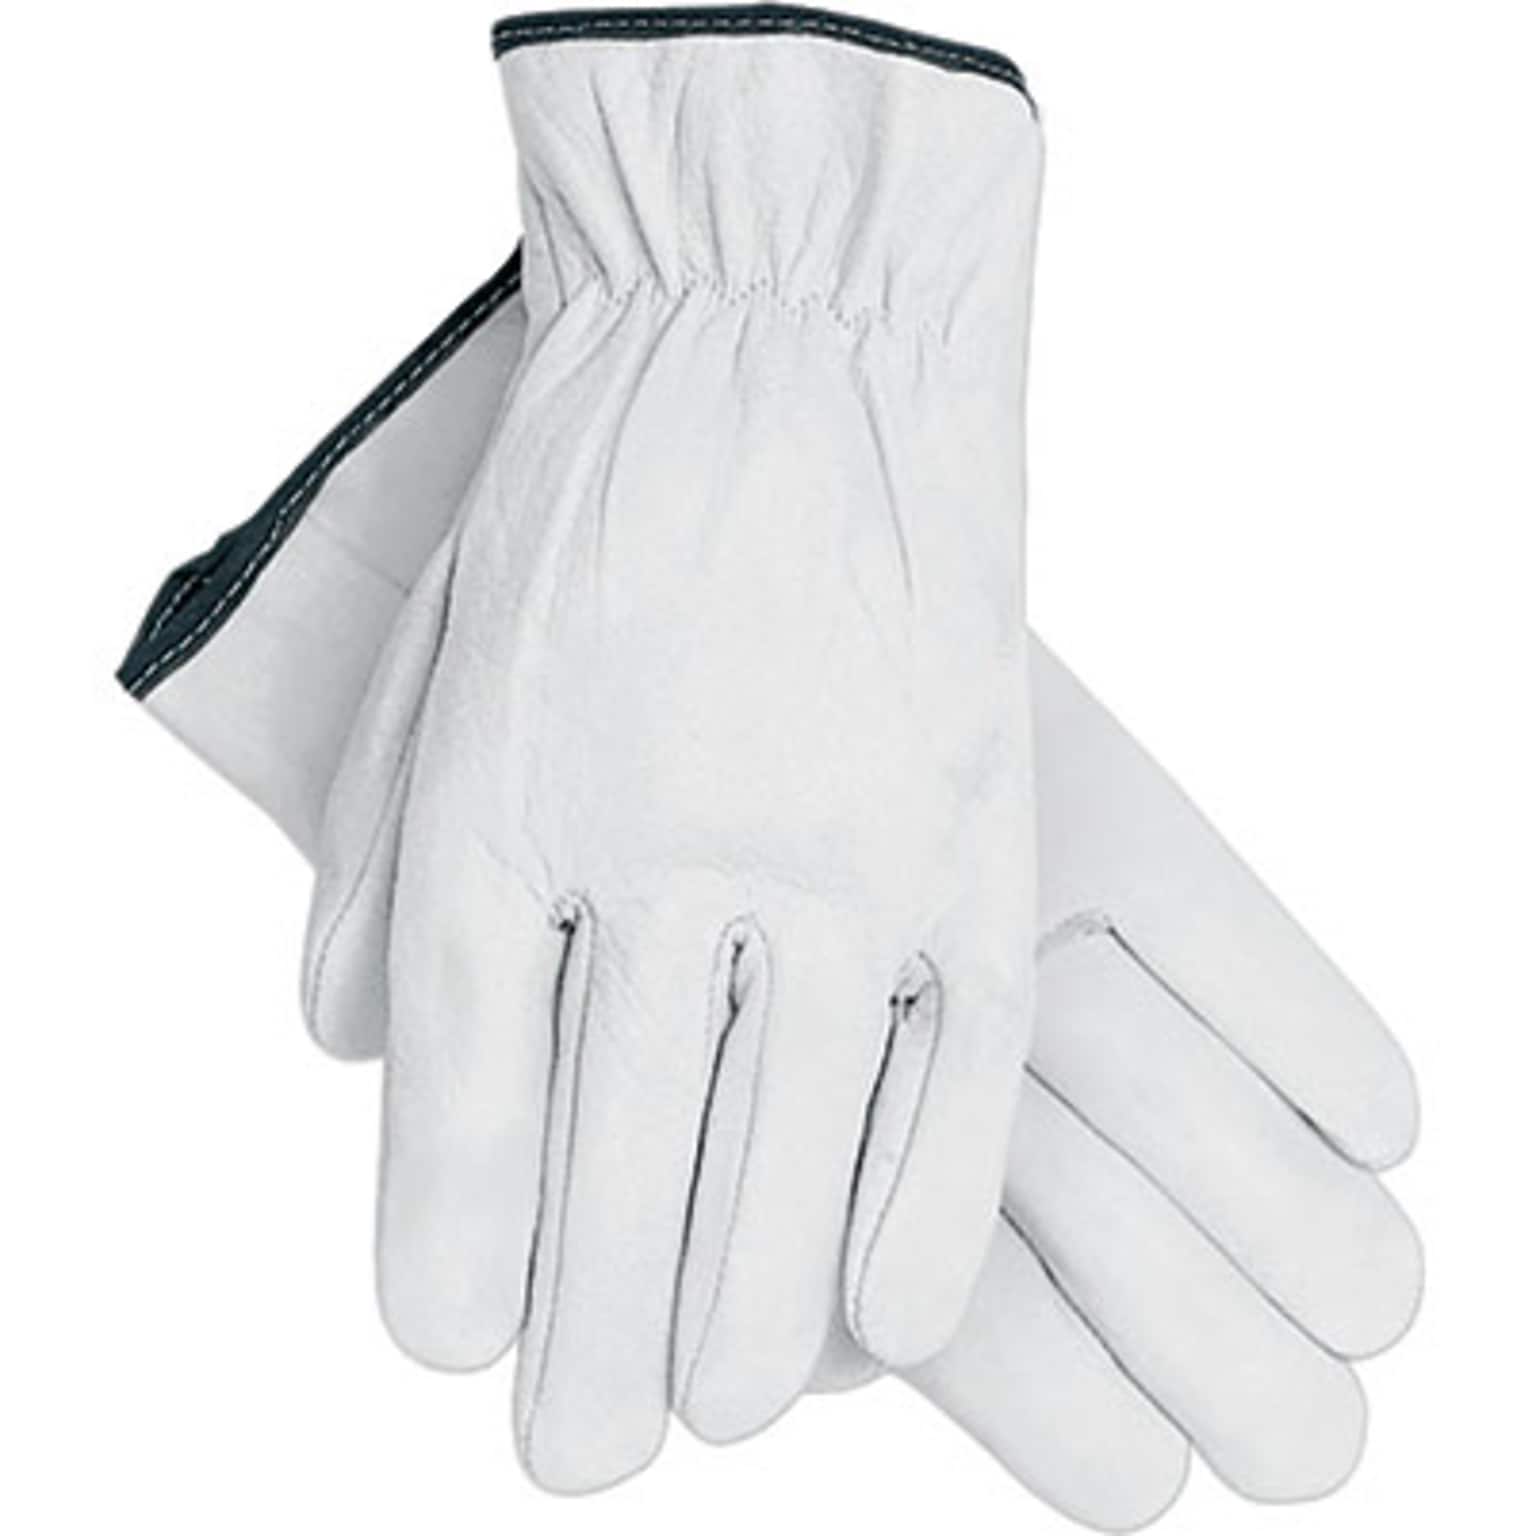 Memphis Gloves Drivers Work Gloves, Goatskin Leather, Slip-On Cuff, White, Medium, 12 Pair (3601M)